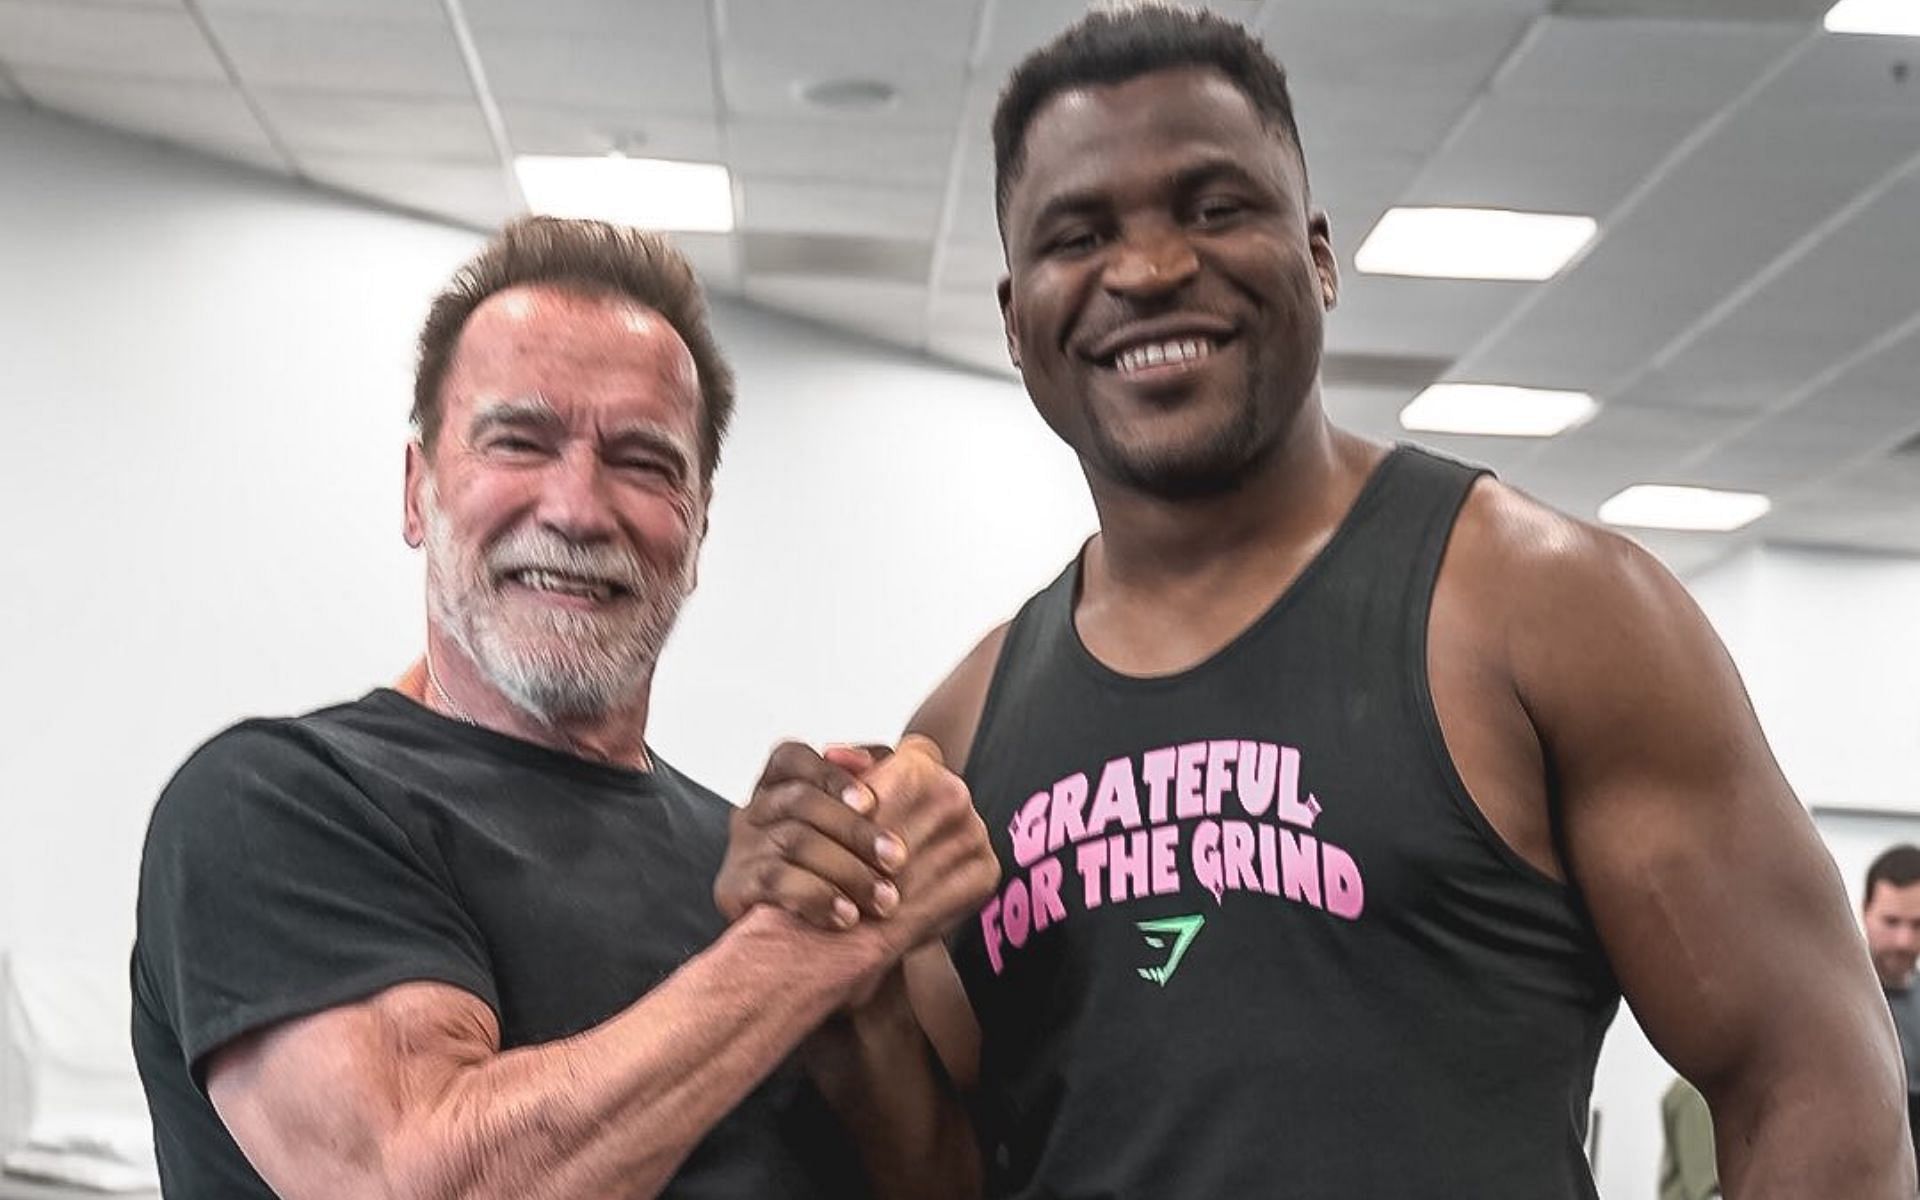 Arnold Schwarzenegger [Left], and Francis Ngannou [Right] [Photo credit: @francis_ngannou - Twitter]